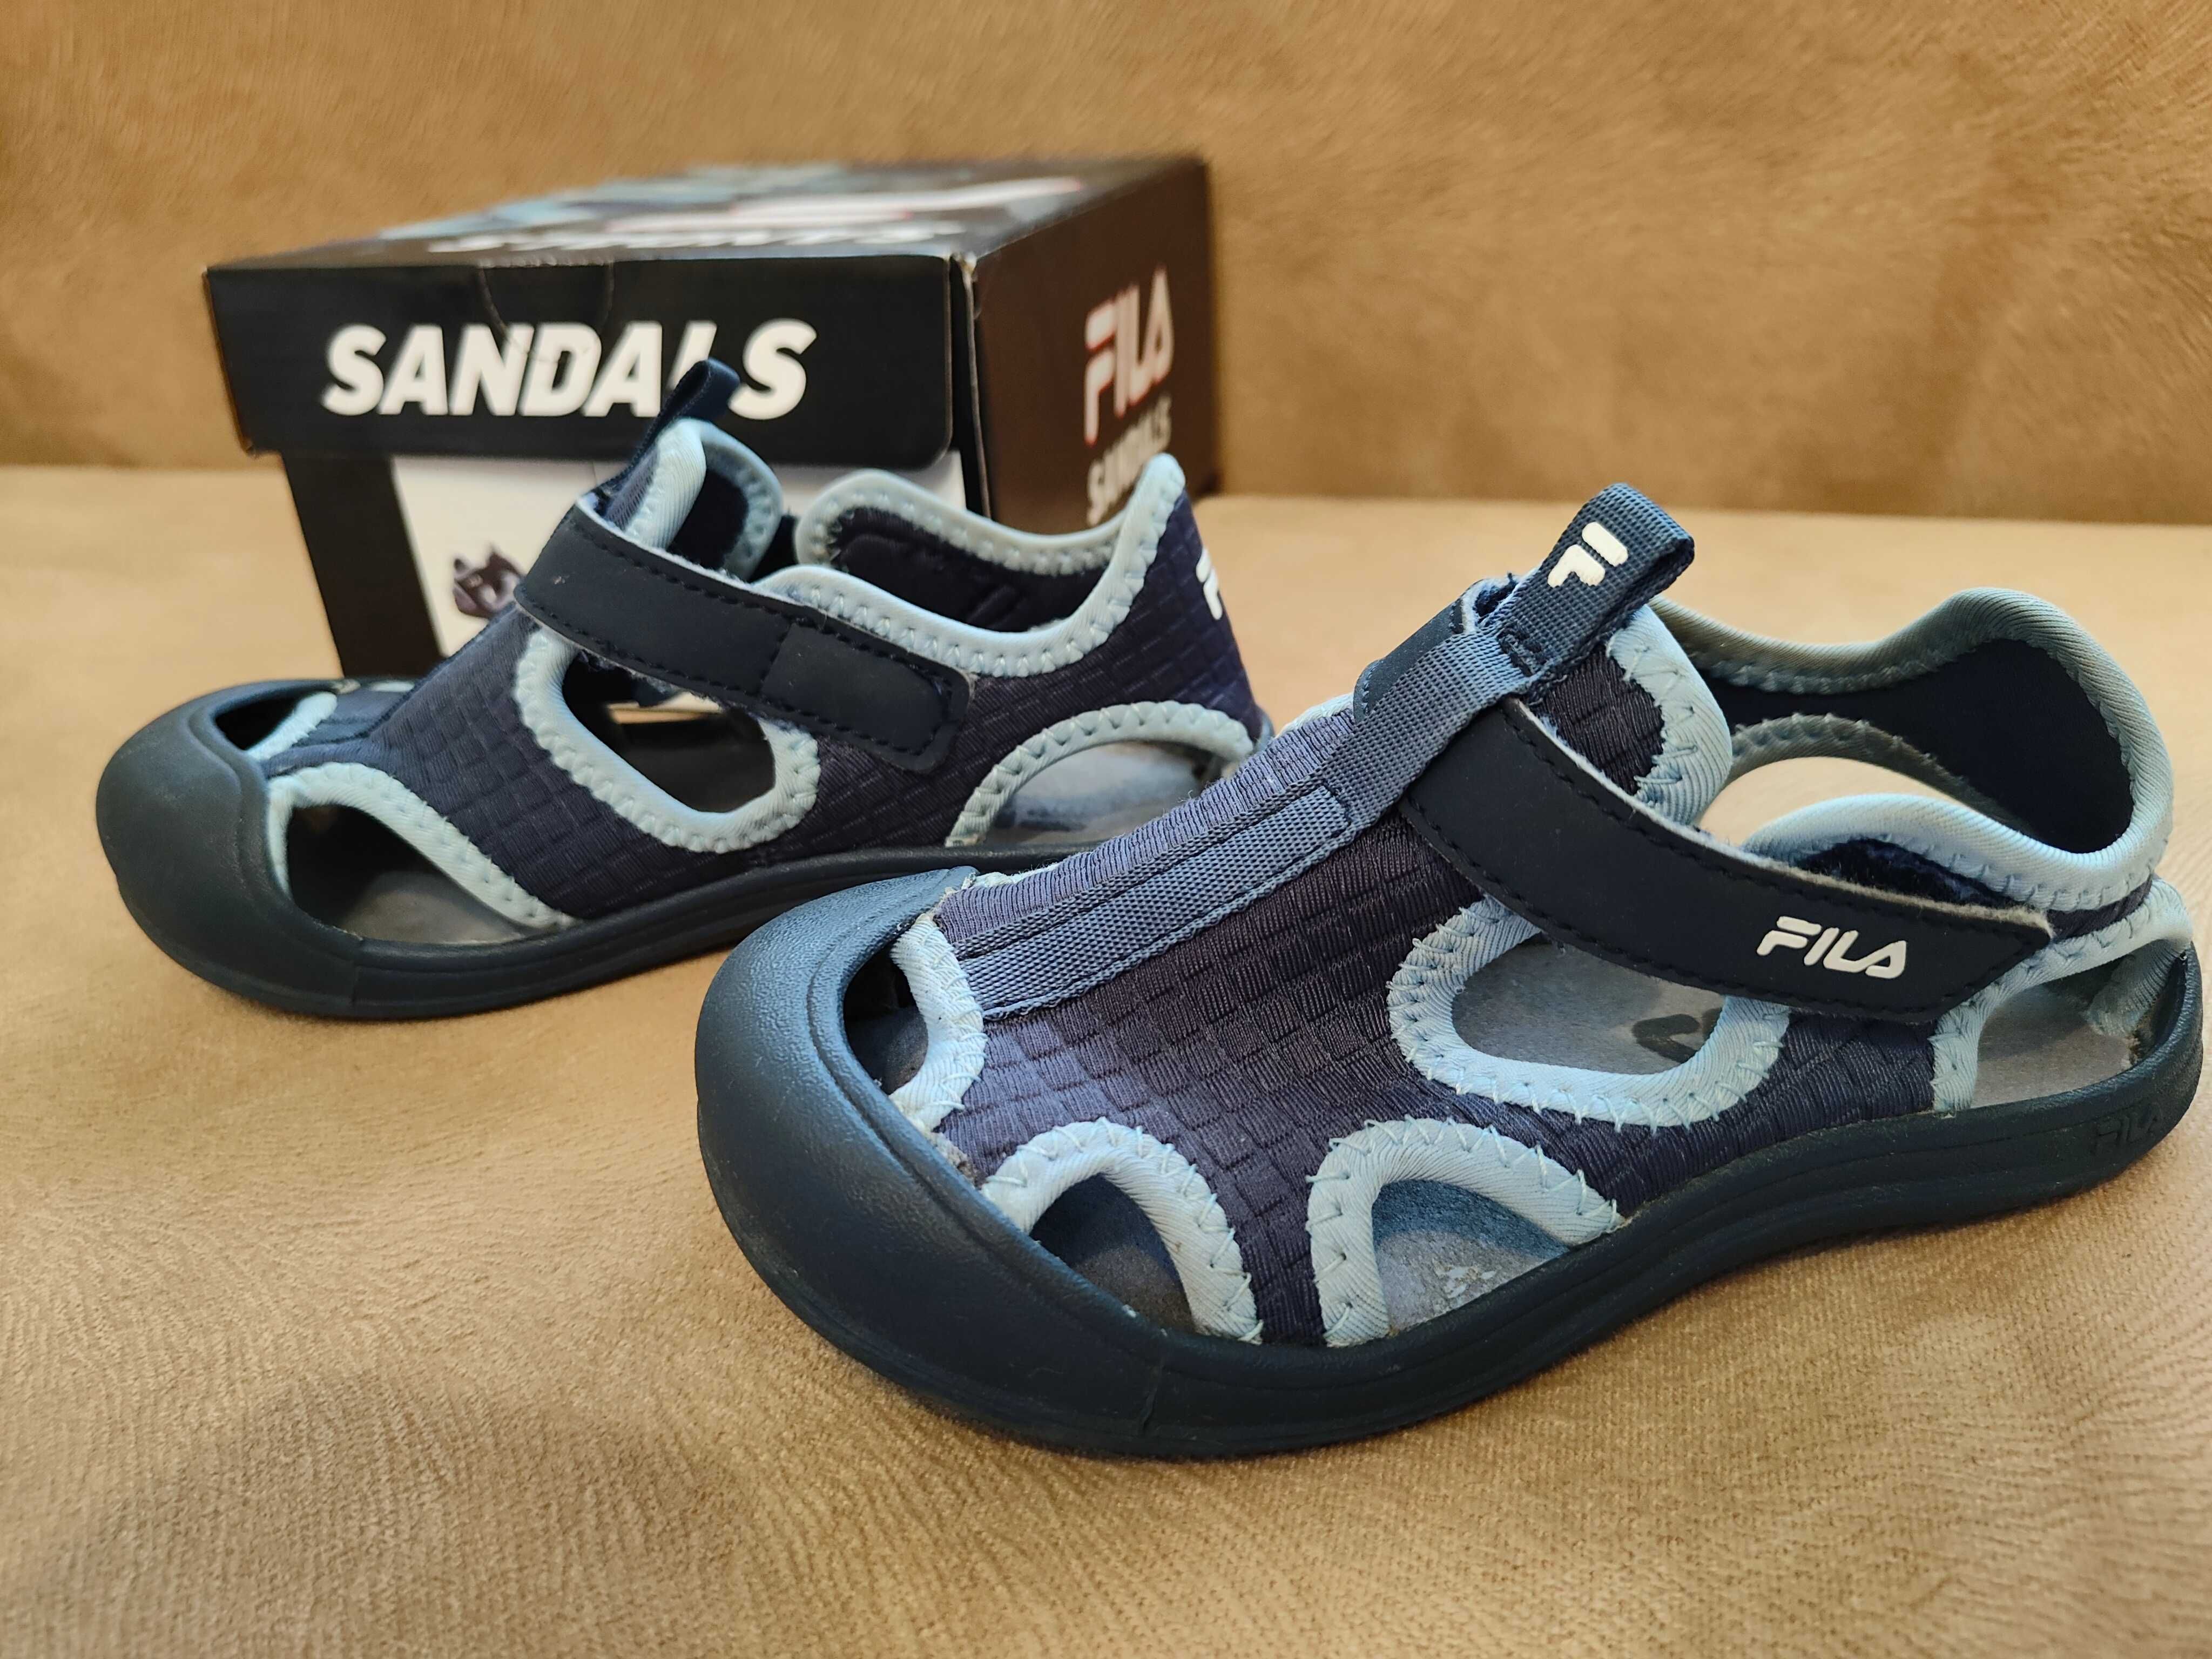 Vand sandale copii Fila